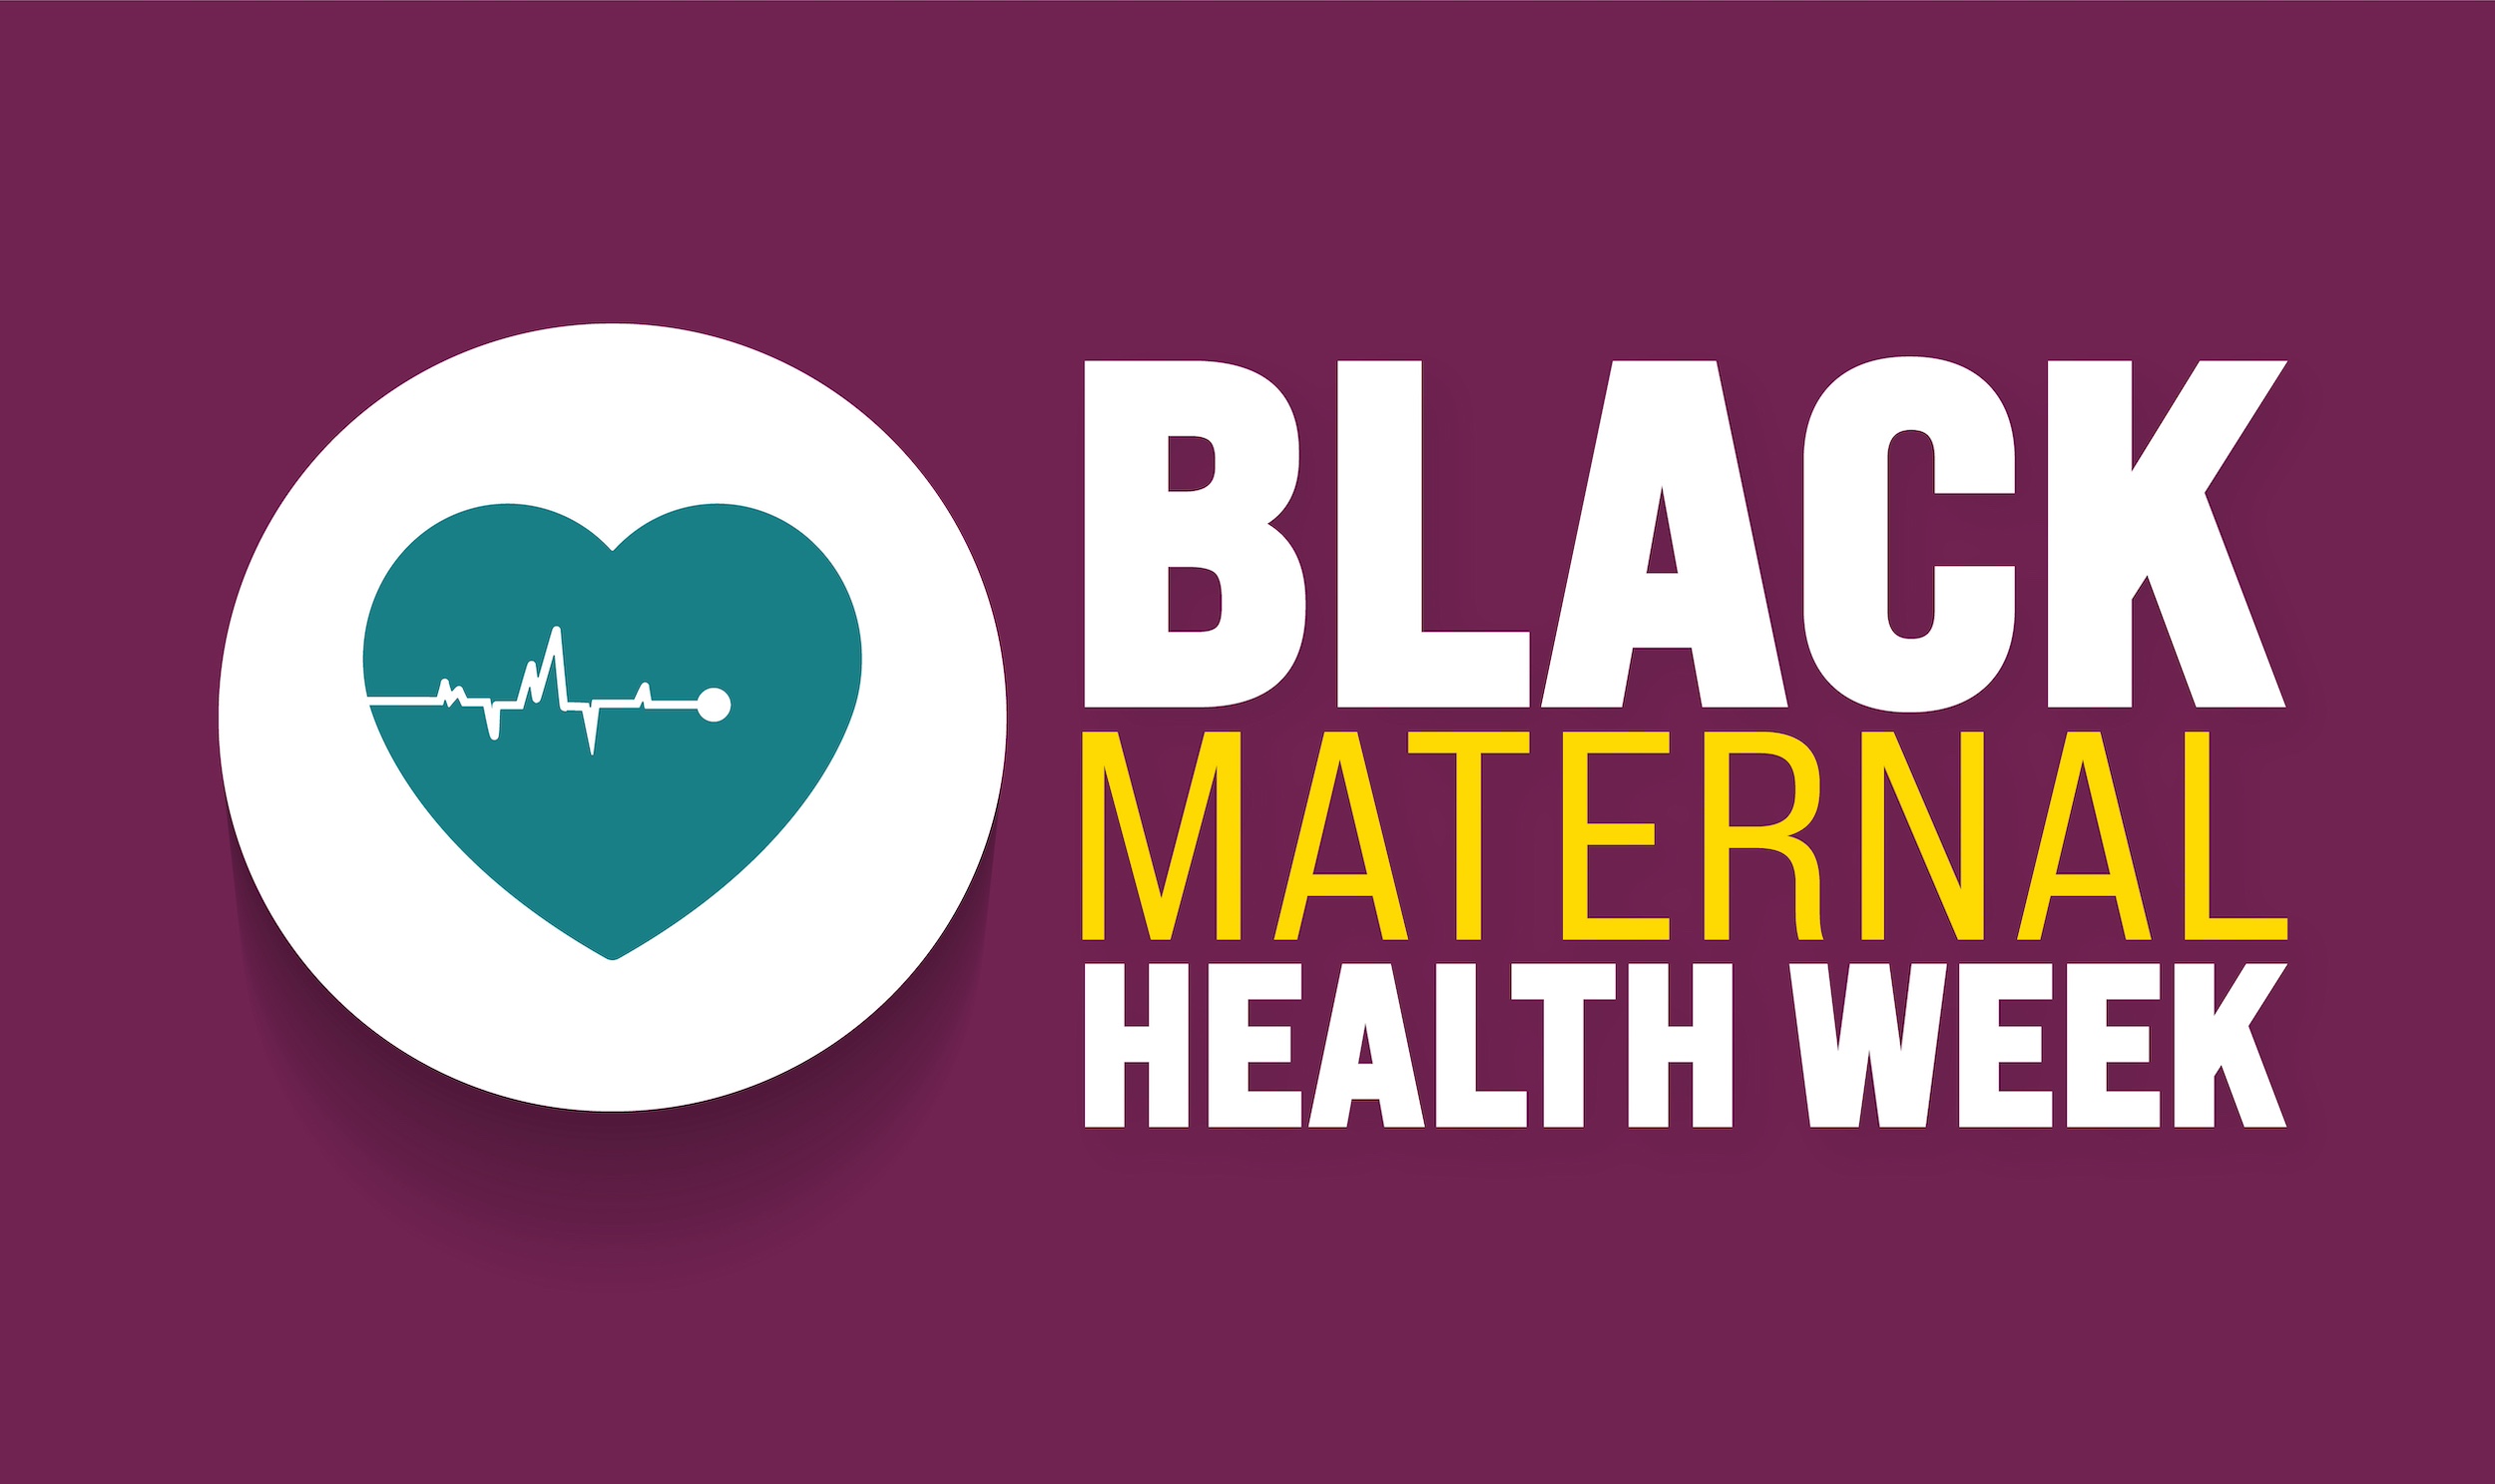 Black maternal health week 001 on successful black parenting magazine